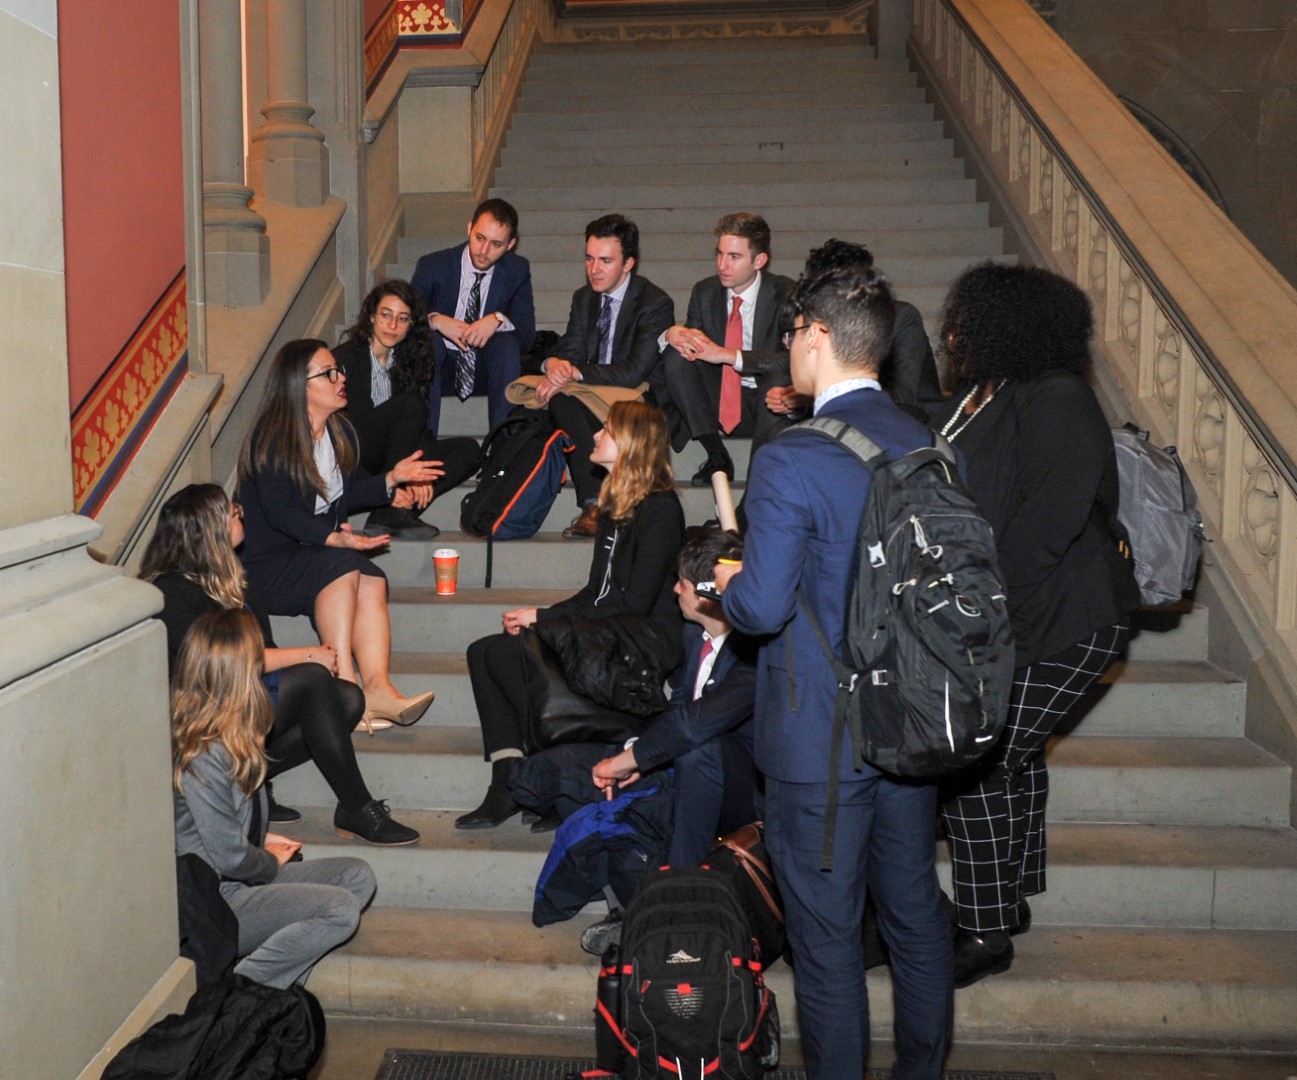 Assemblywoman Cruz chats with students.